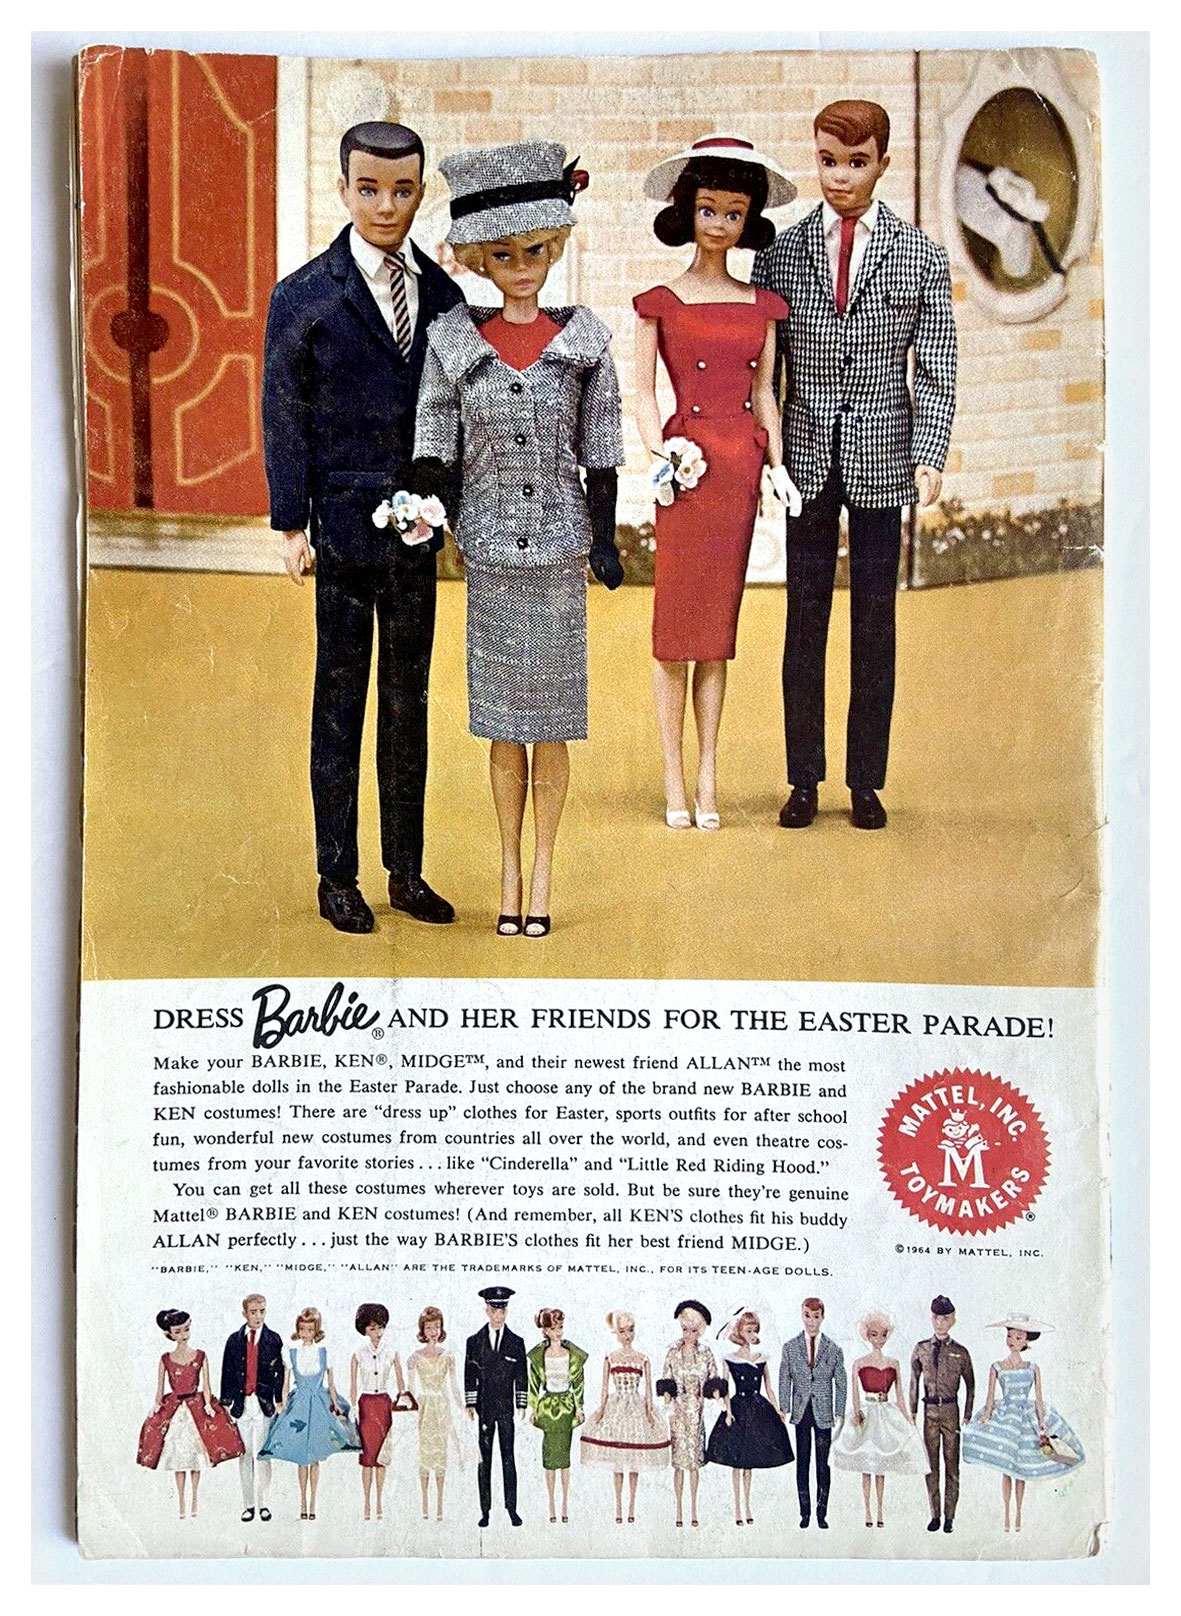 1964 Mattel advertisement from Jack & Jill magazine